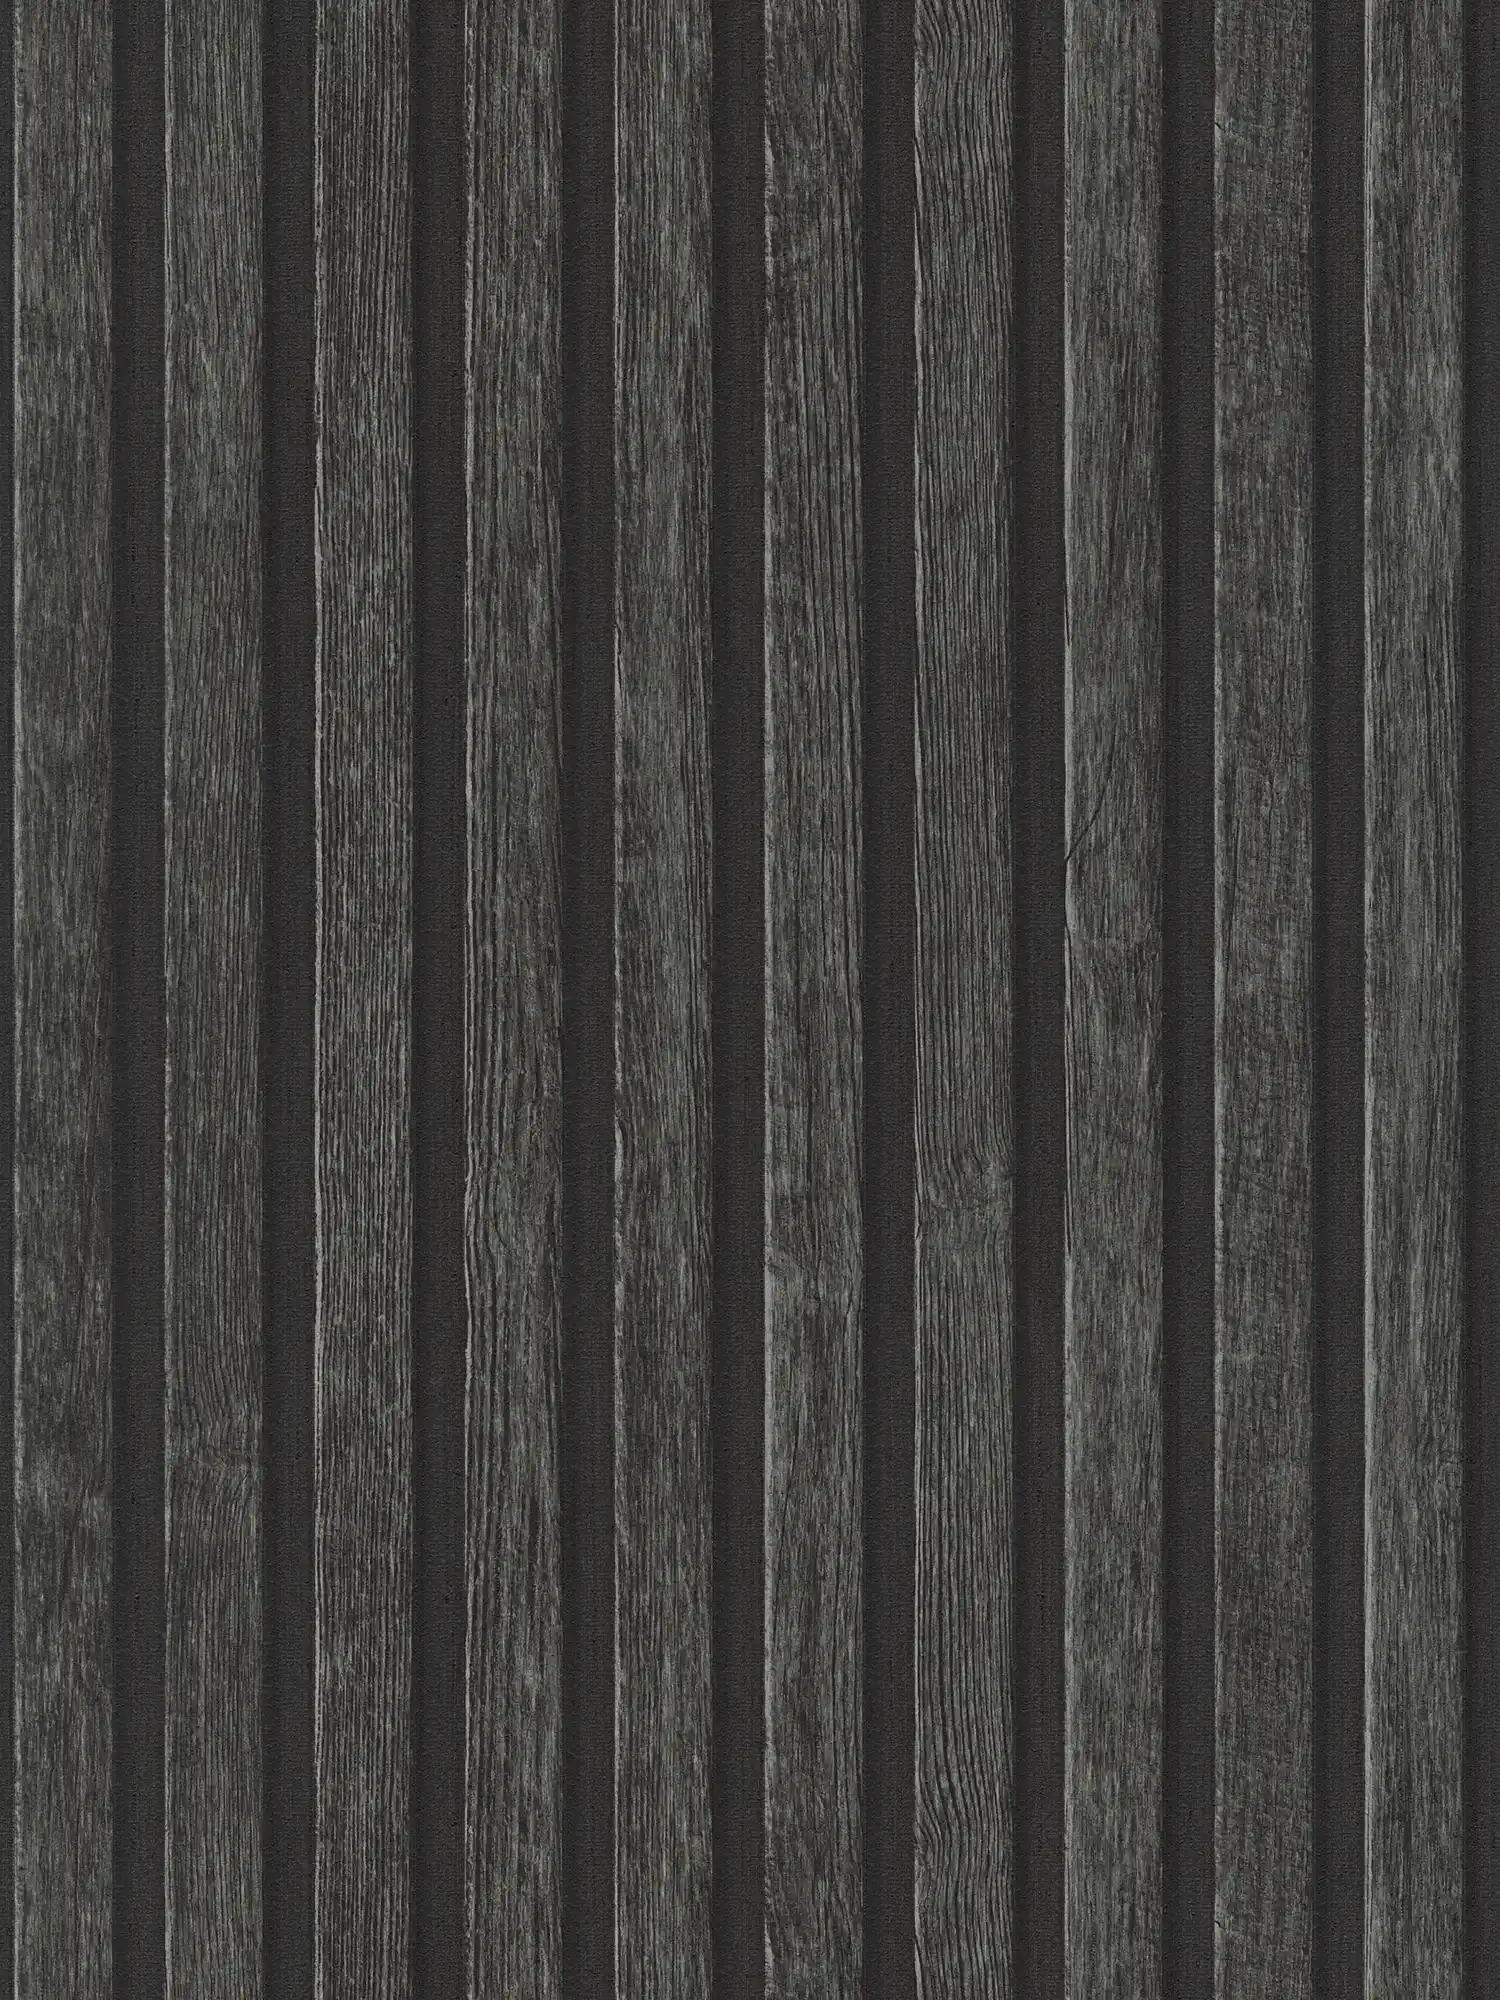         Wallpaper wood look with panel pattern - black, brown
    